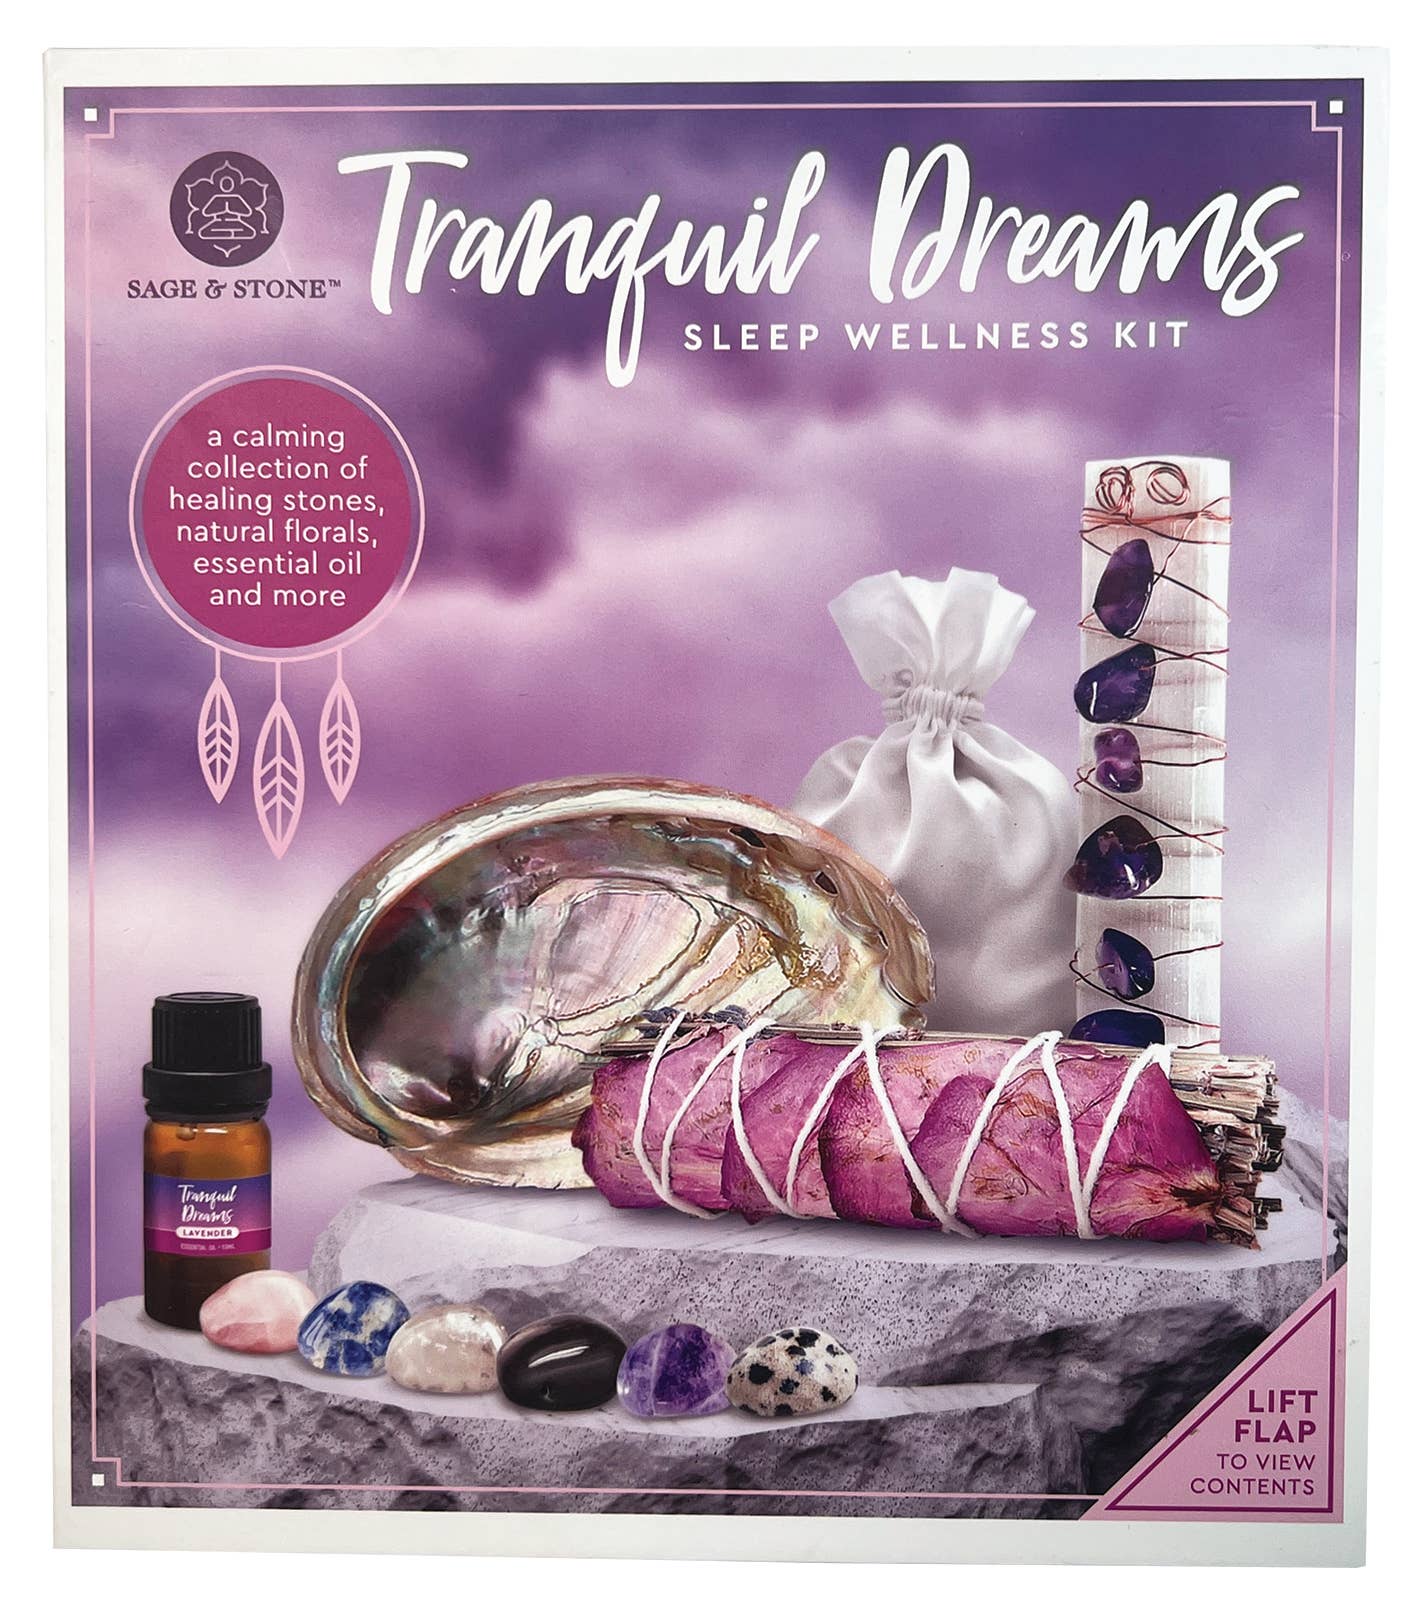 Sleep Wellness Kit - Tranquil Dreams